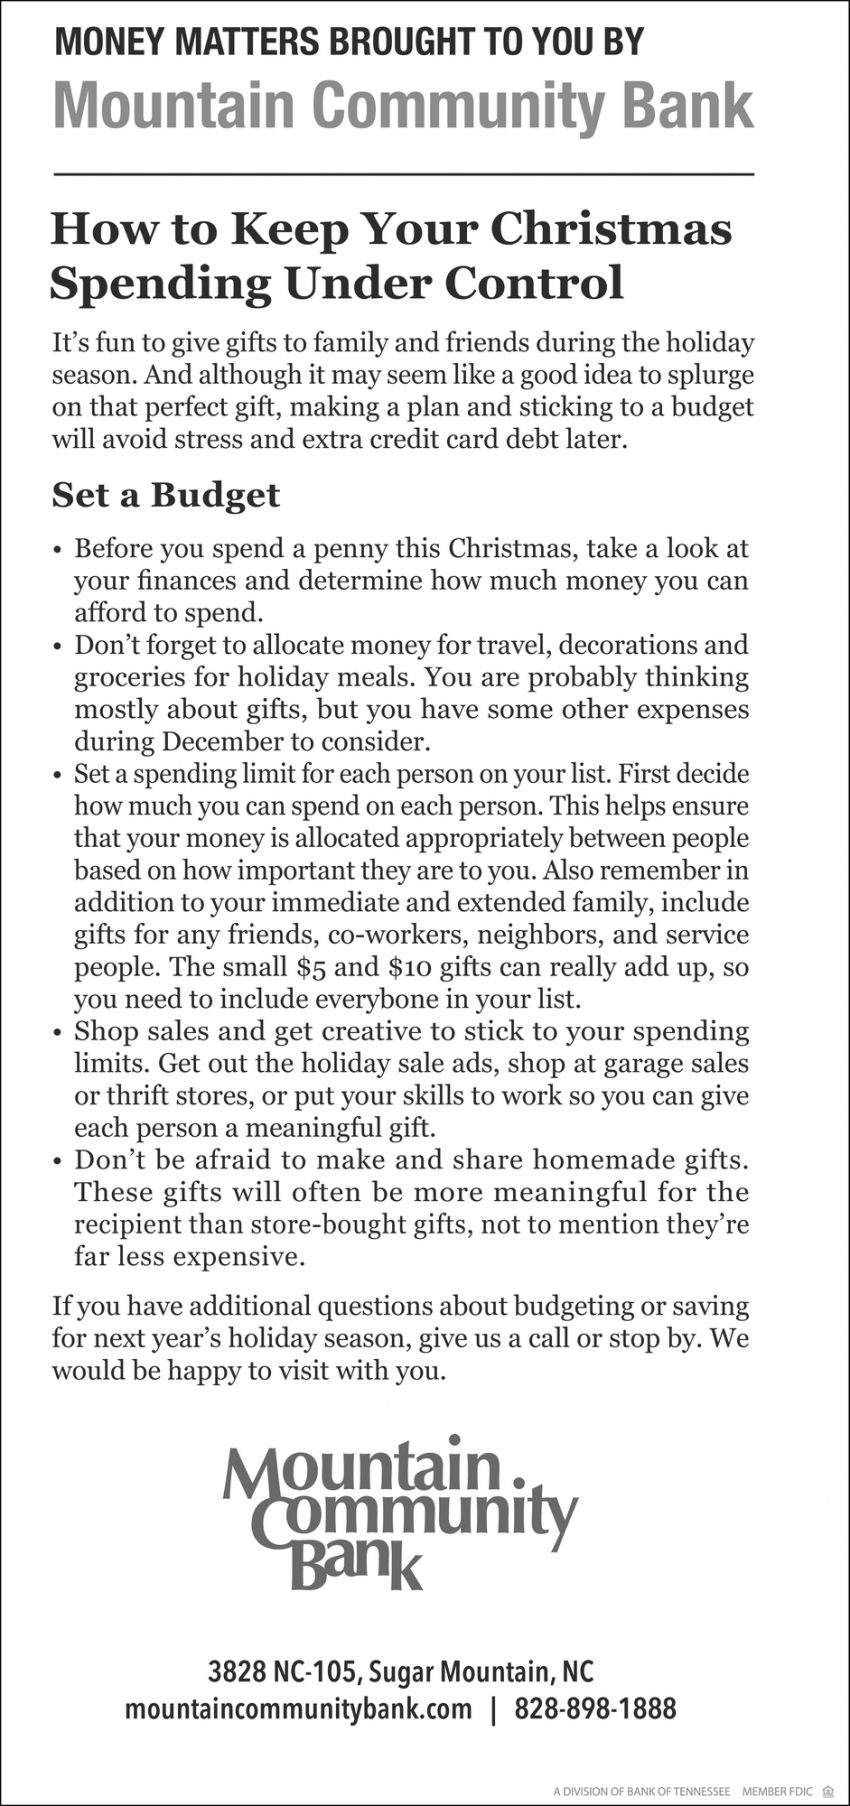 Set a Budget